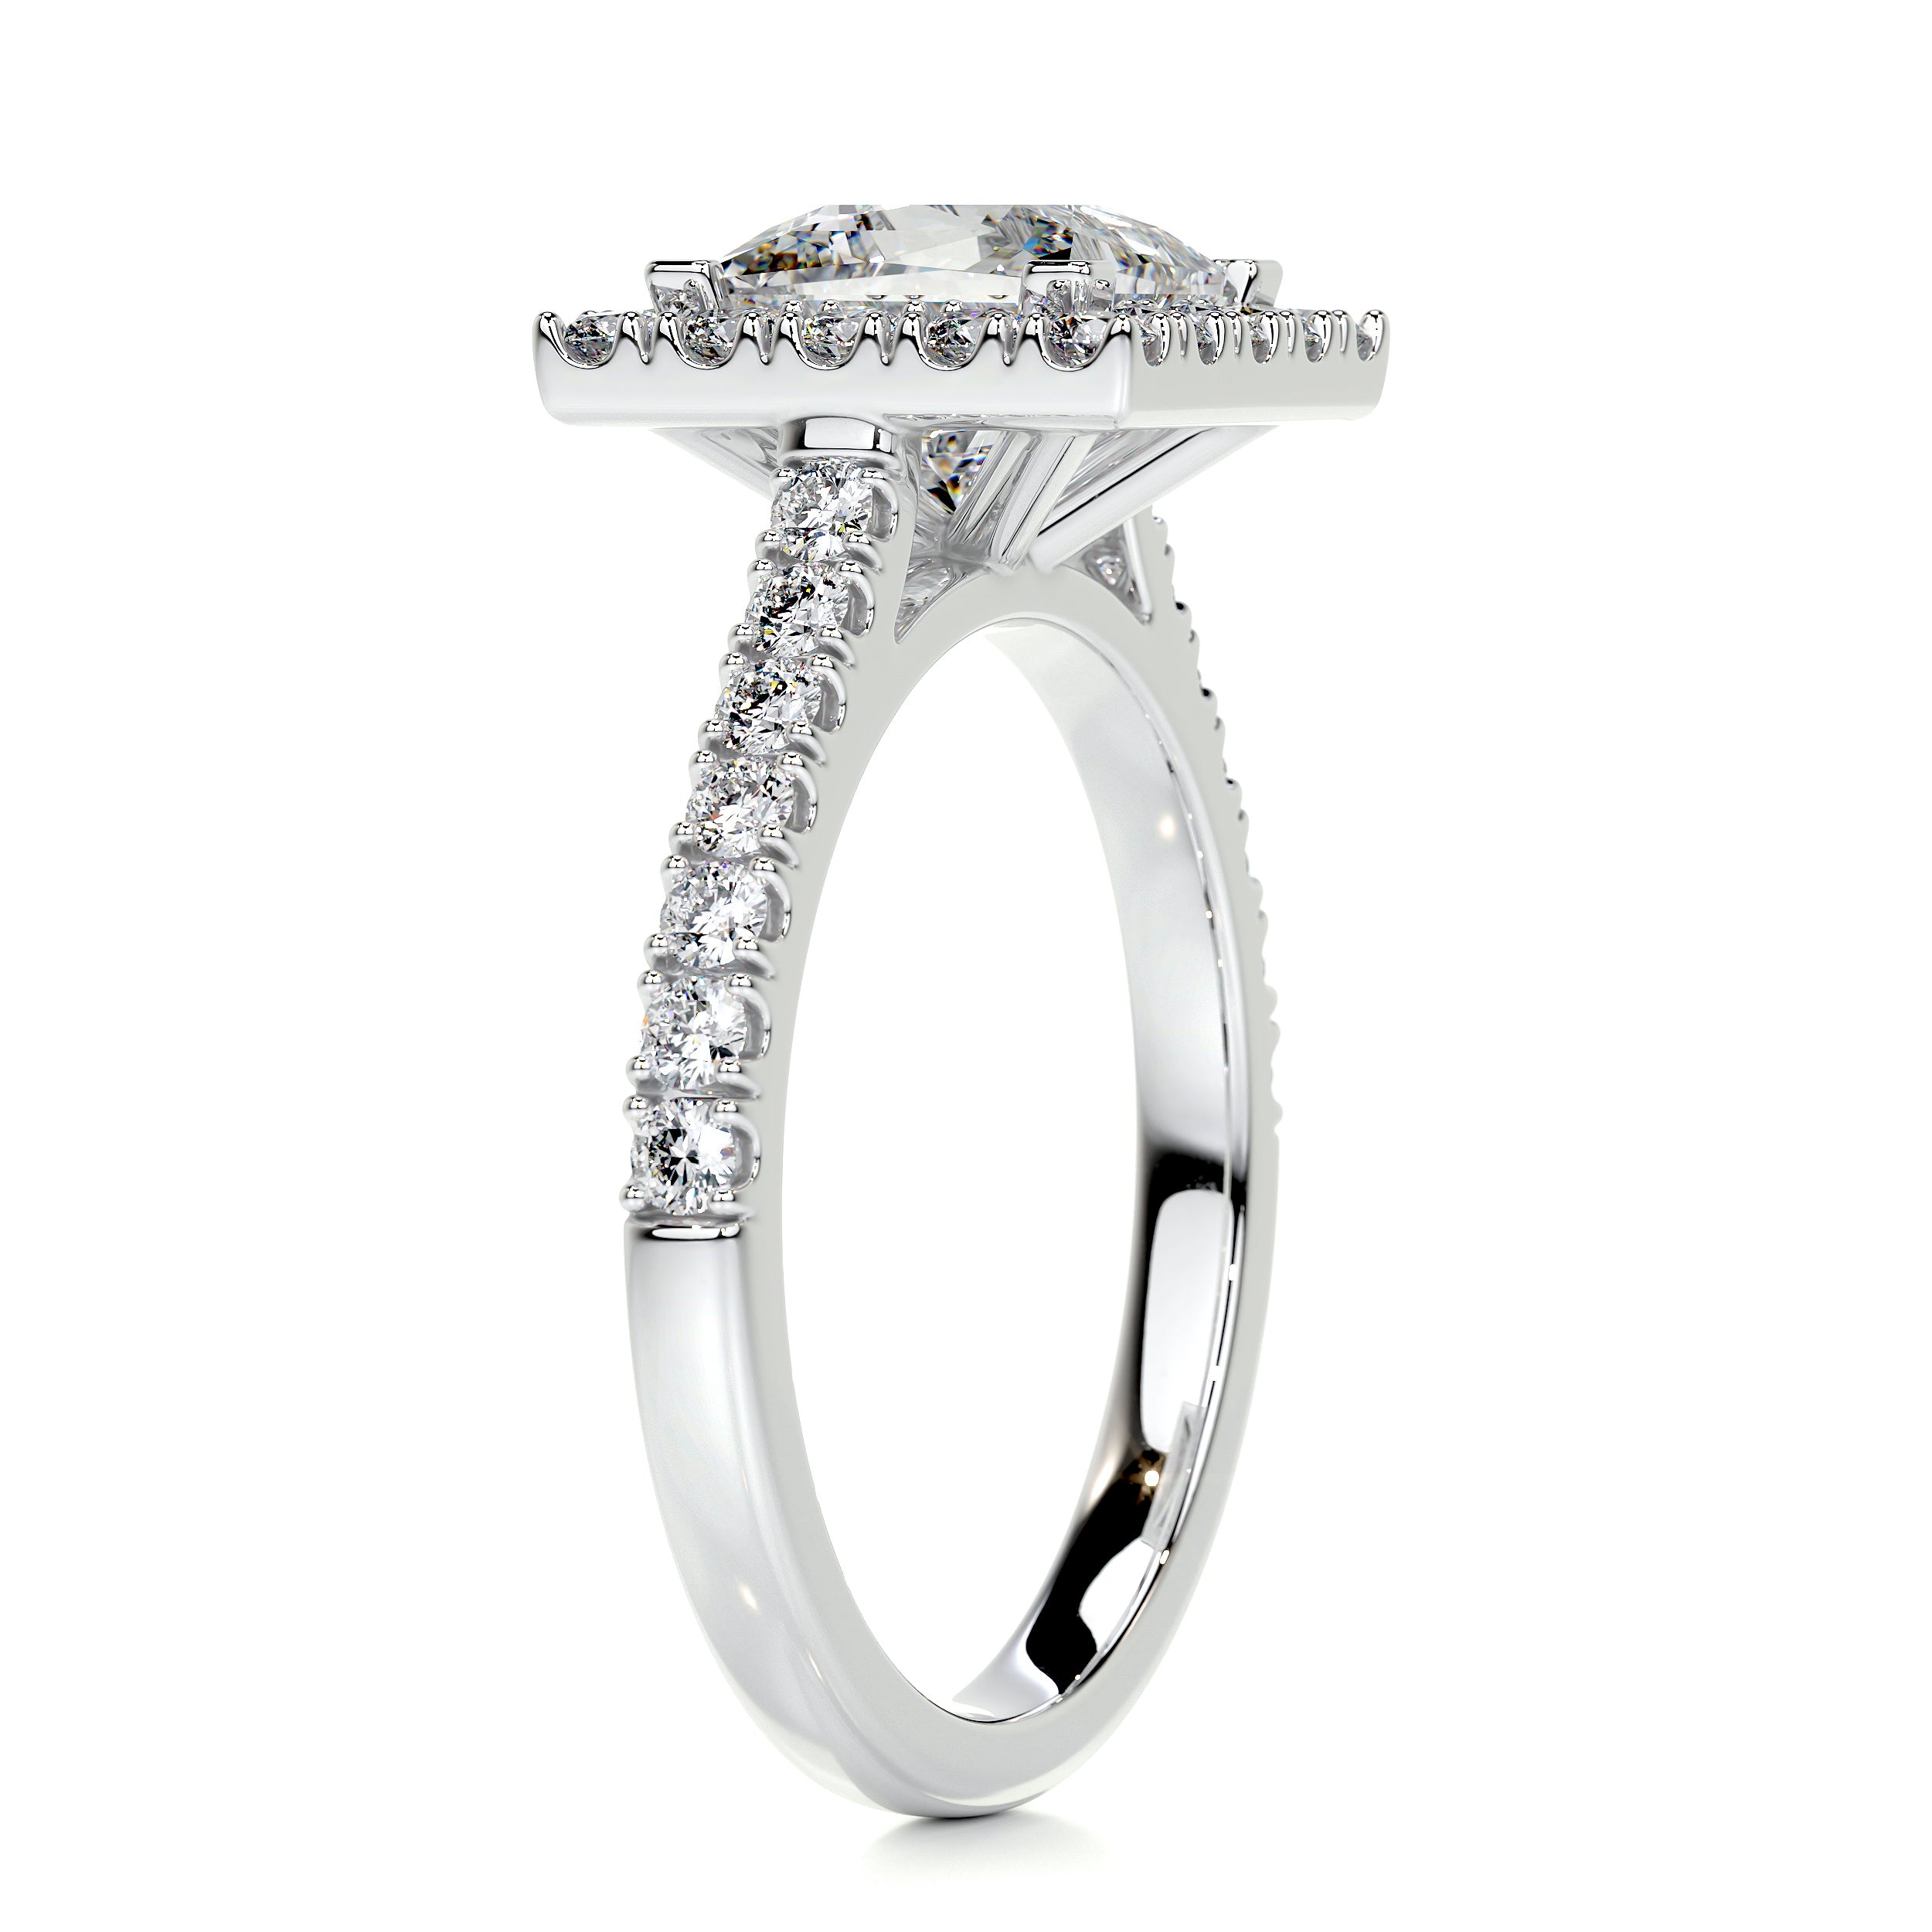 Patricia Diamond Engagement Ring   (2.5 Carat) -14K White Gold